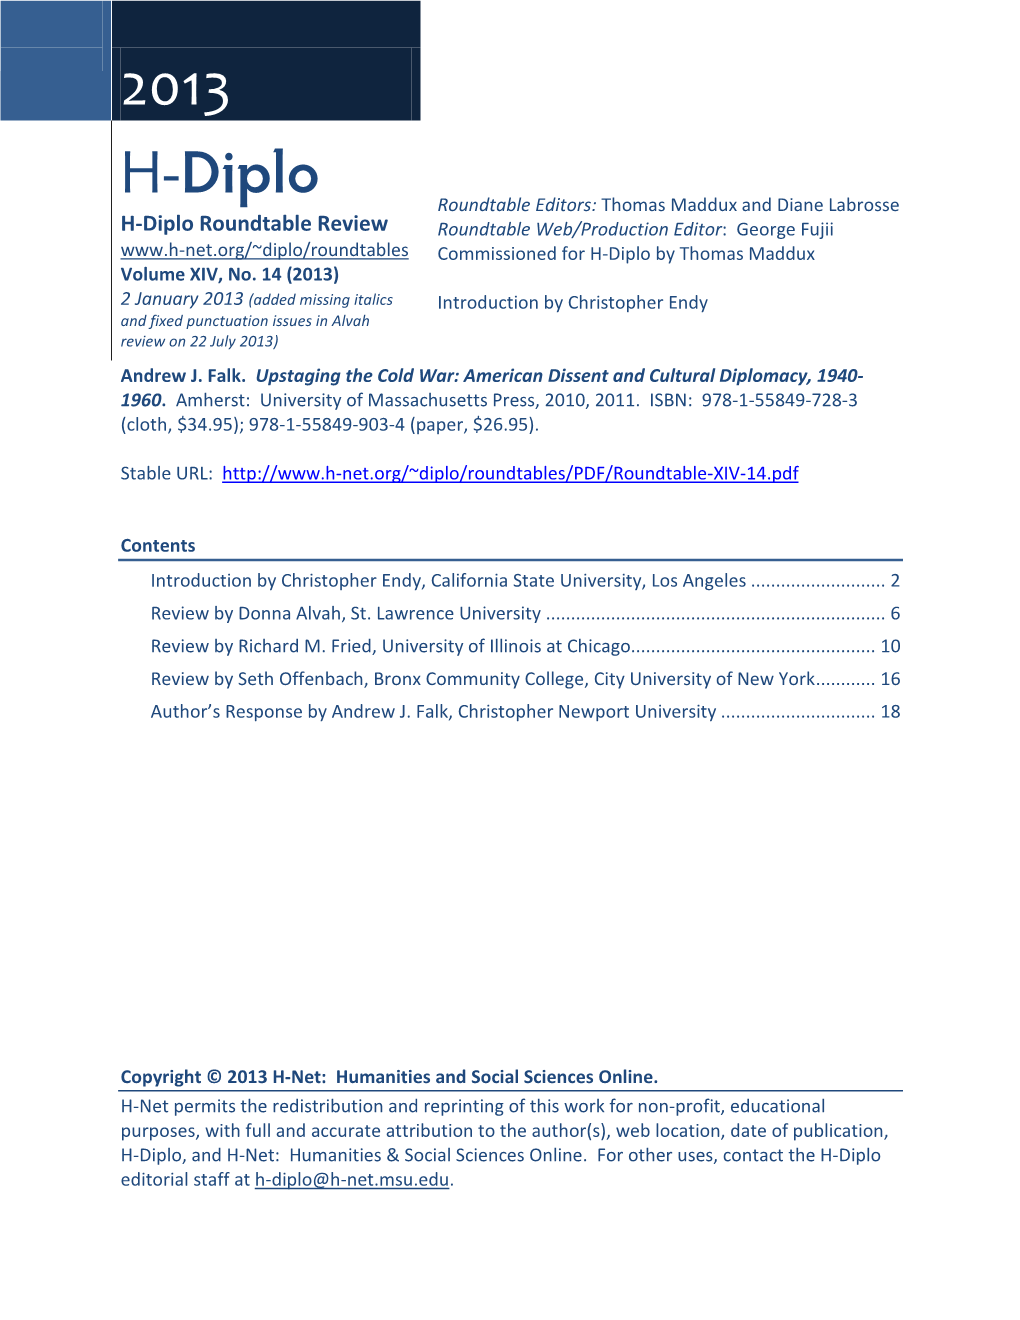 H-Diplo Roundtables, Vol. XIV, No. 14